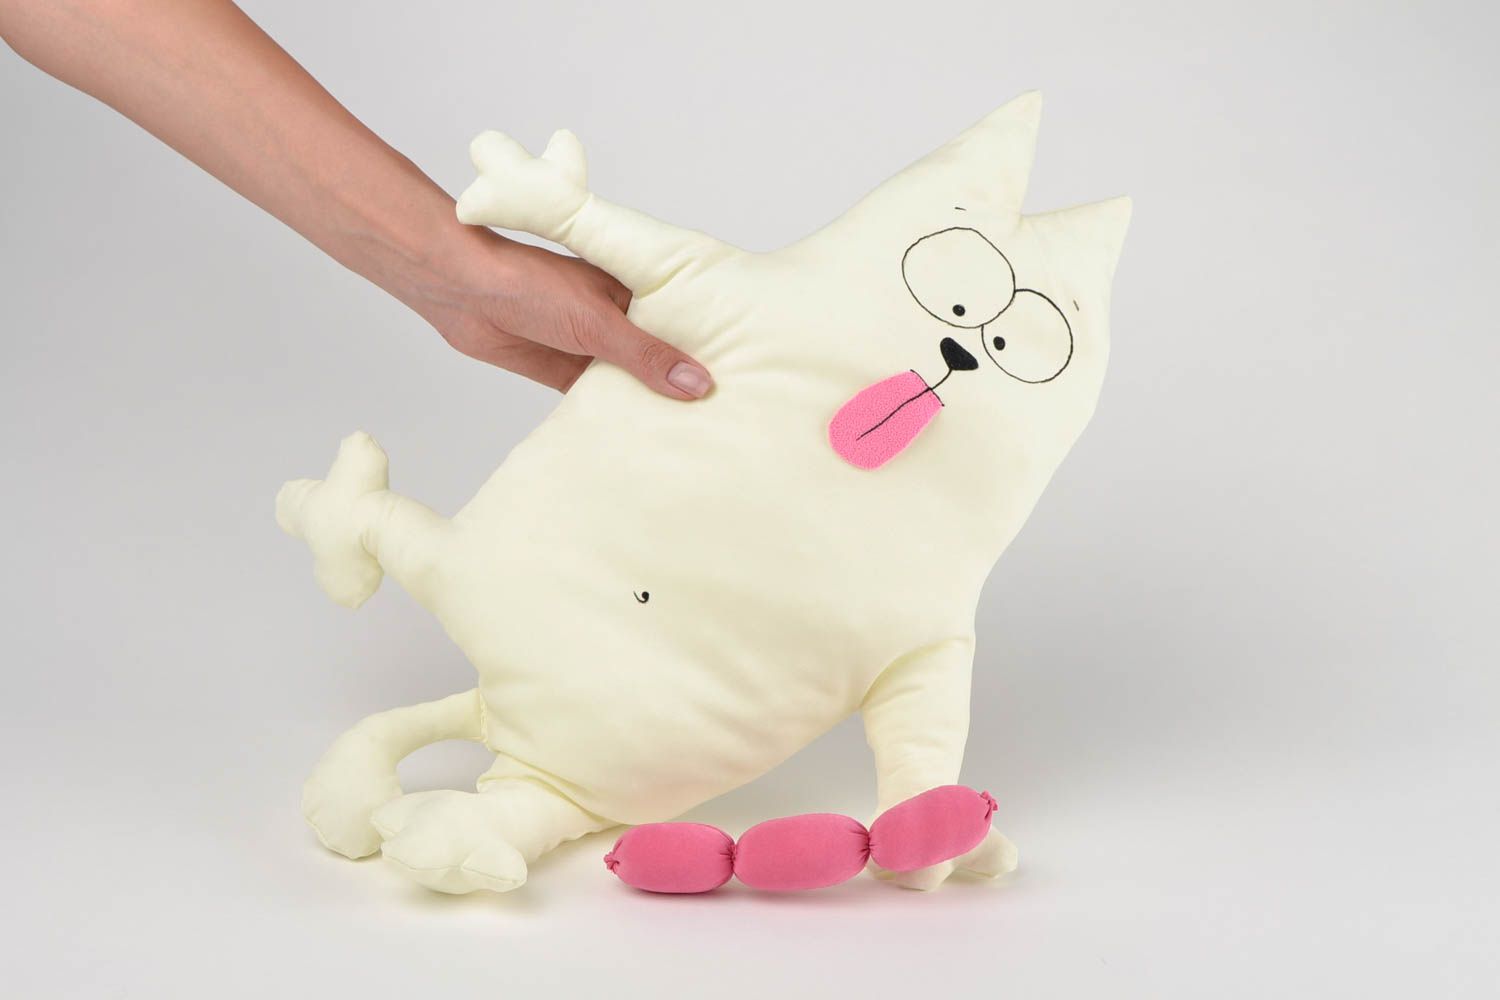 Almohada hecha a mano con forma de gato elemento decorativo regalo original  foto 2